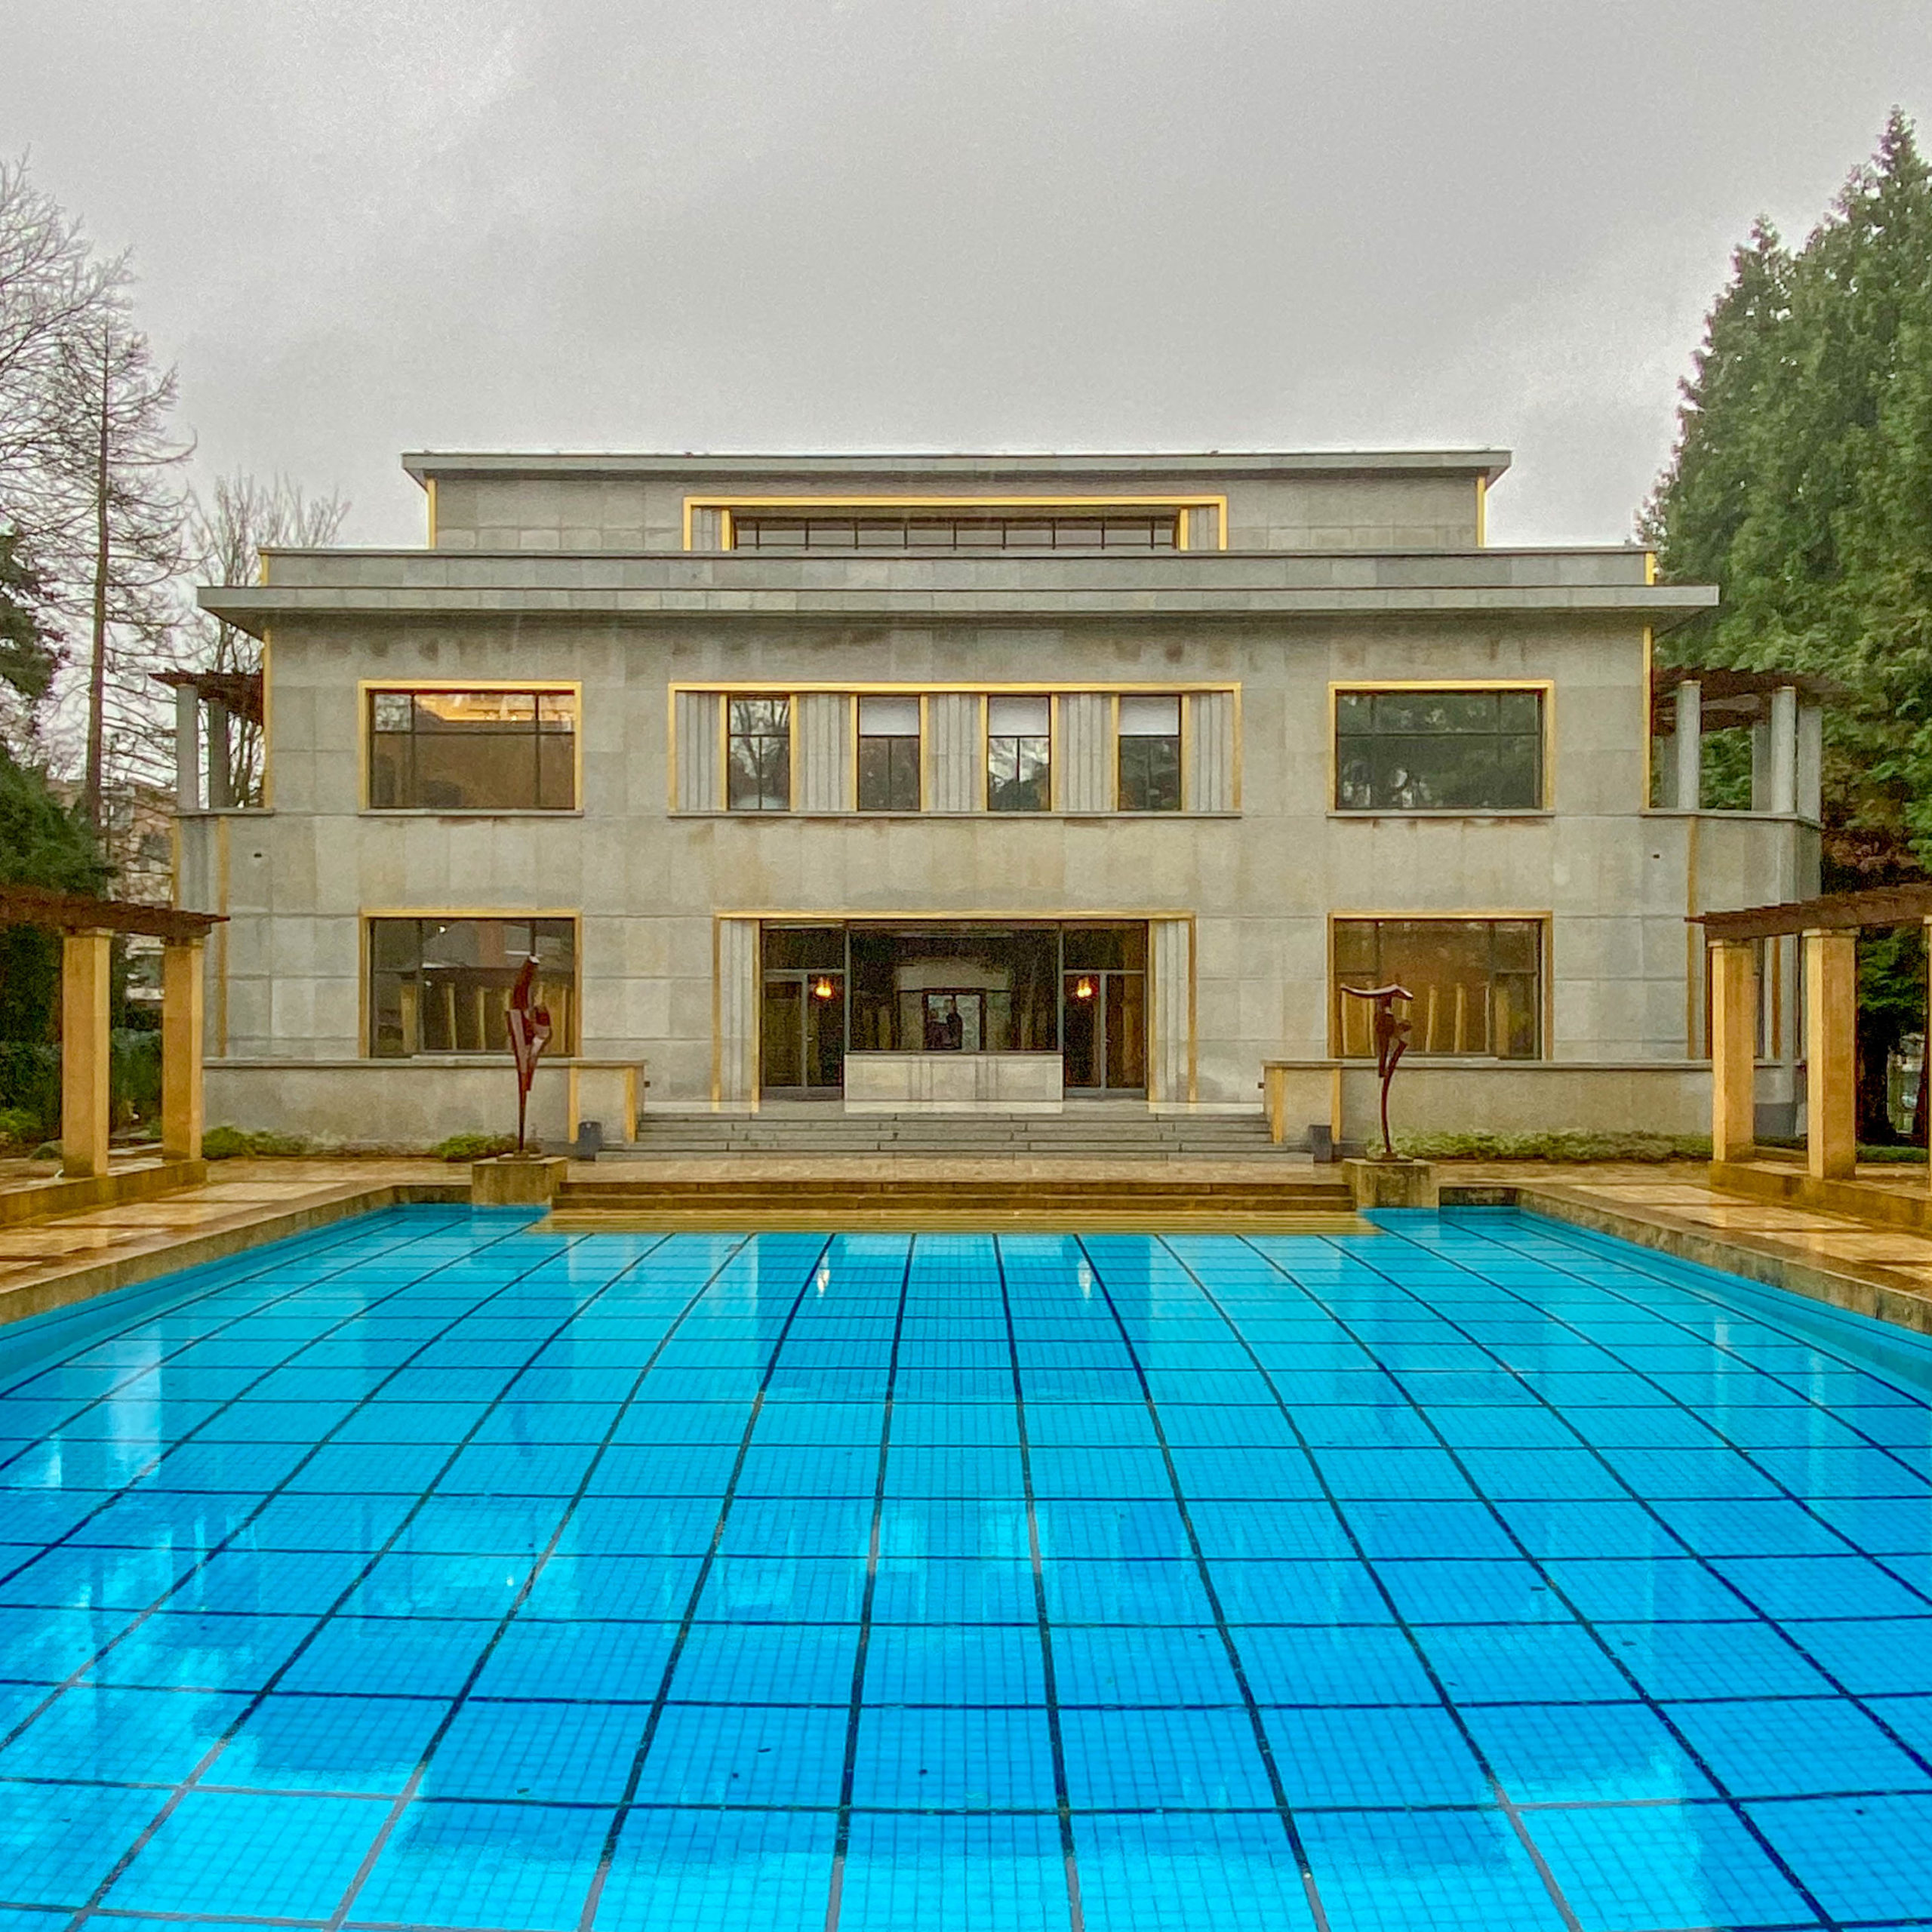 Villa Empain, 1930-1935. Architect: Michel Polak